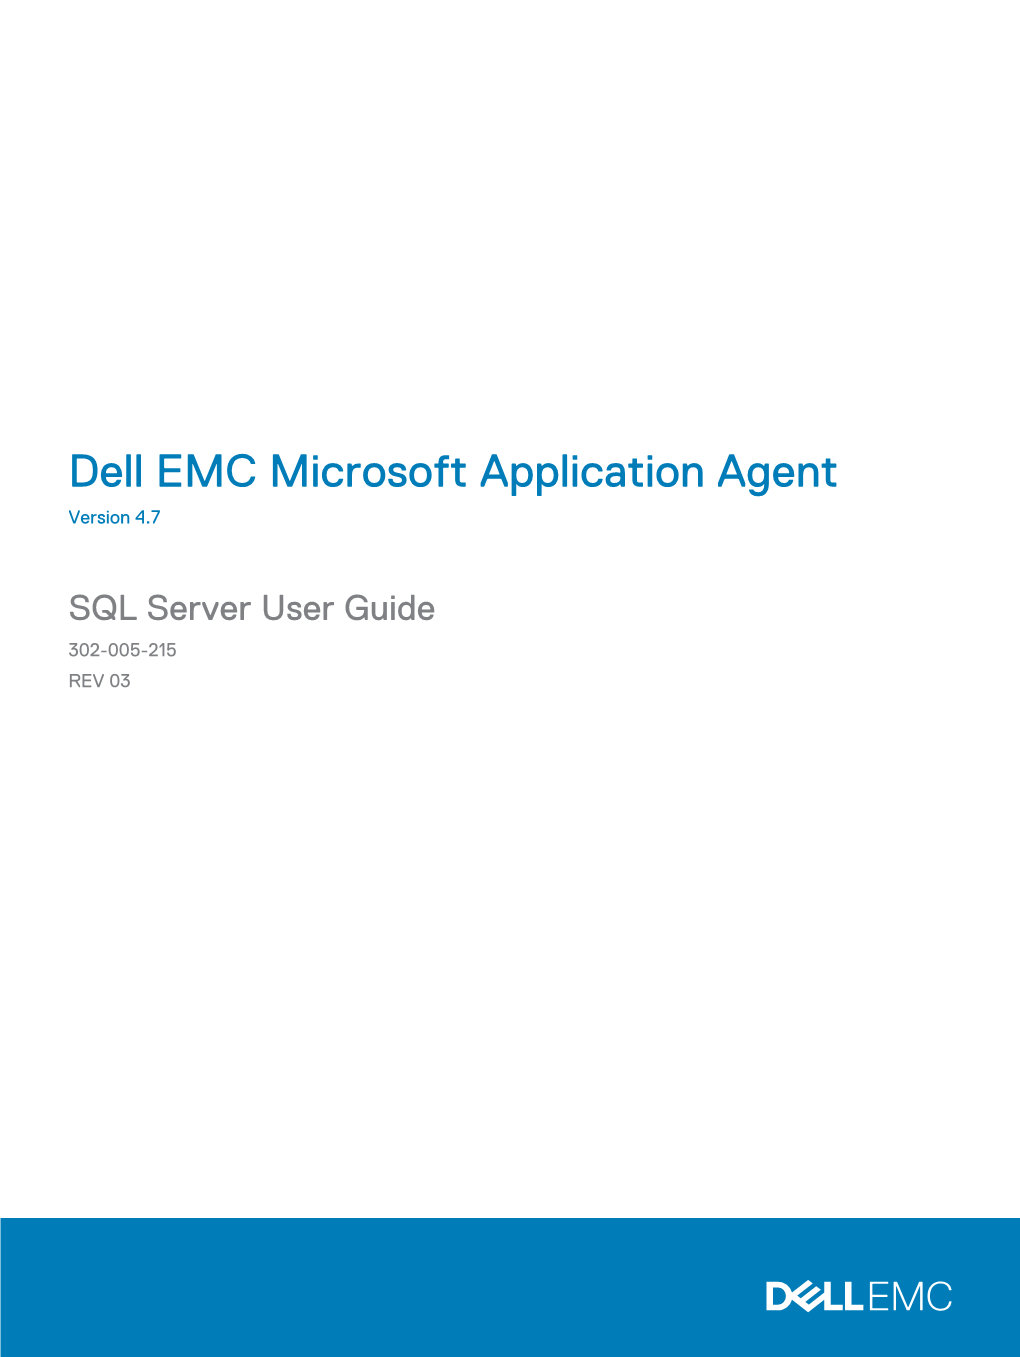 Microsoft Application Agent for SQL Server User Guide